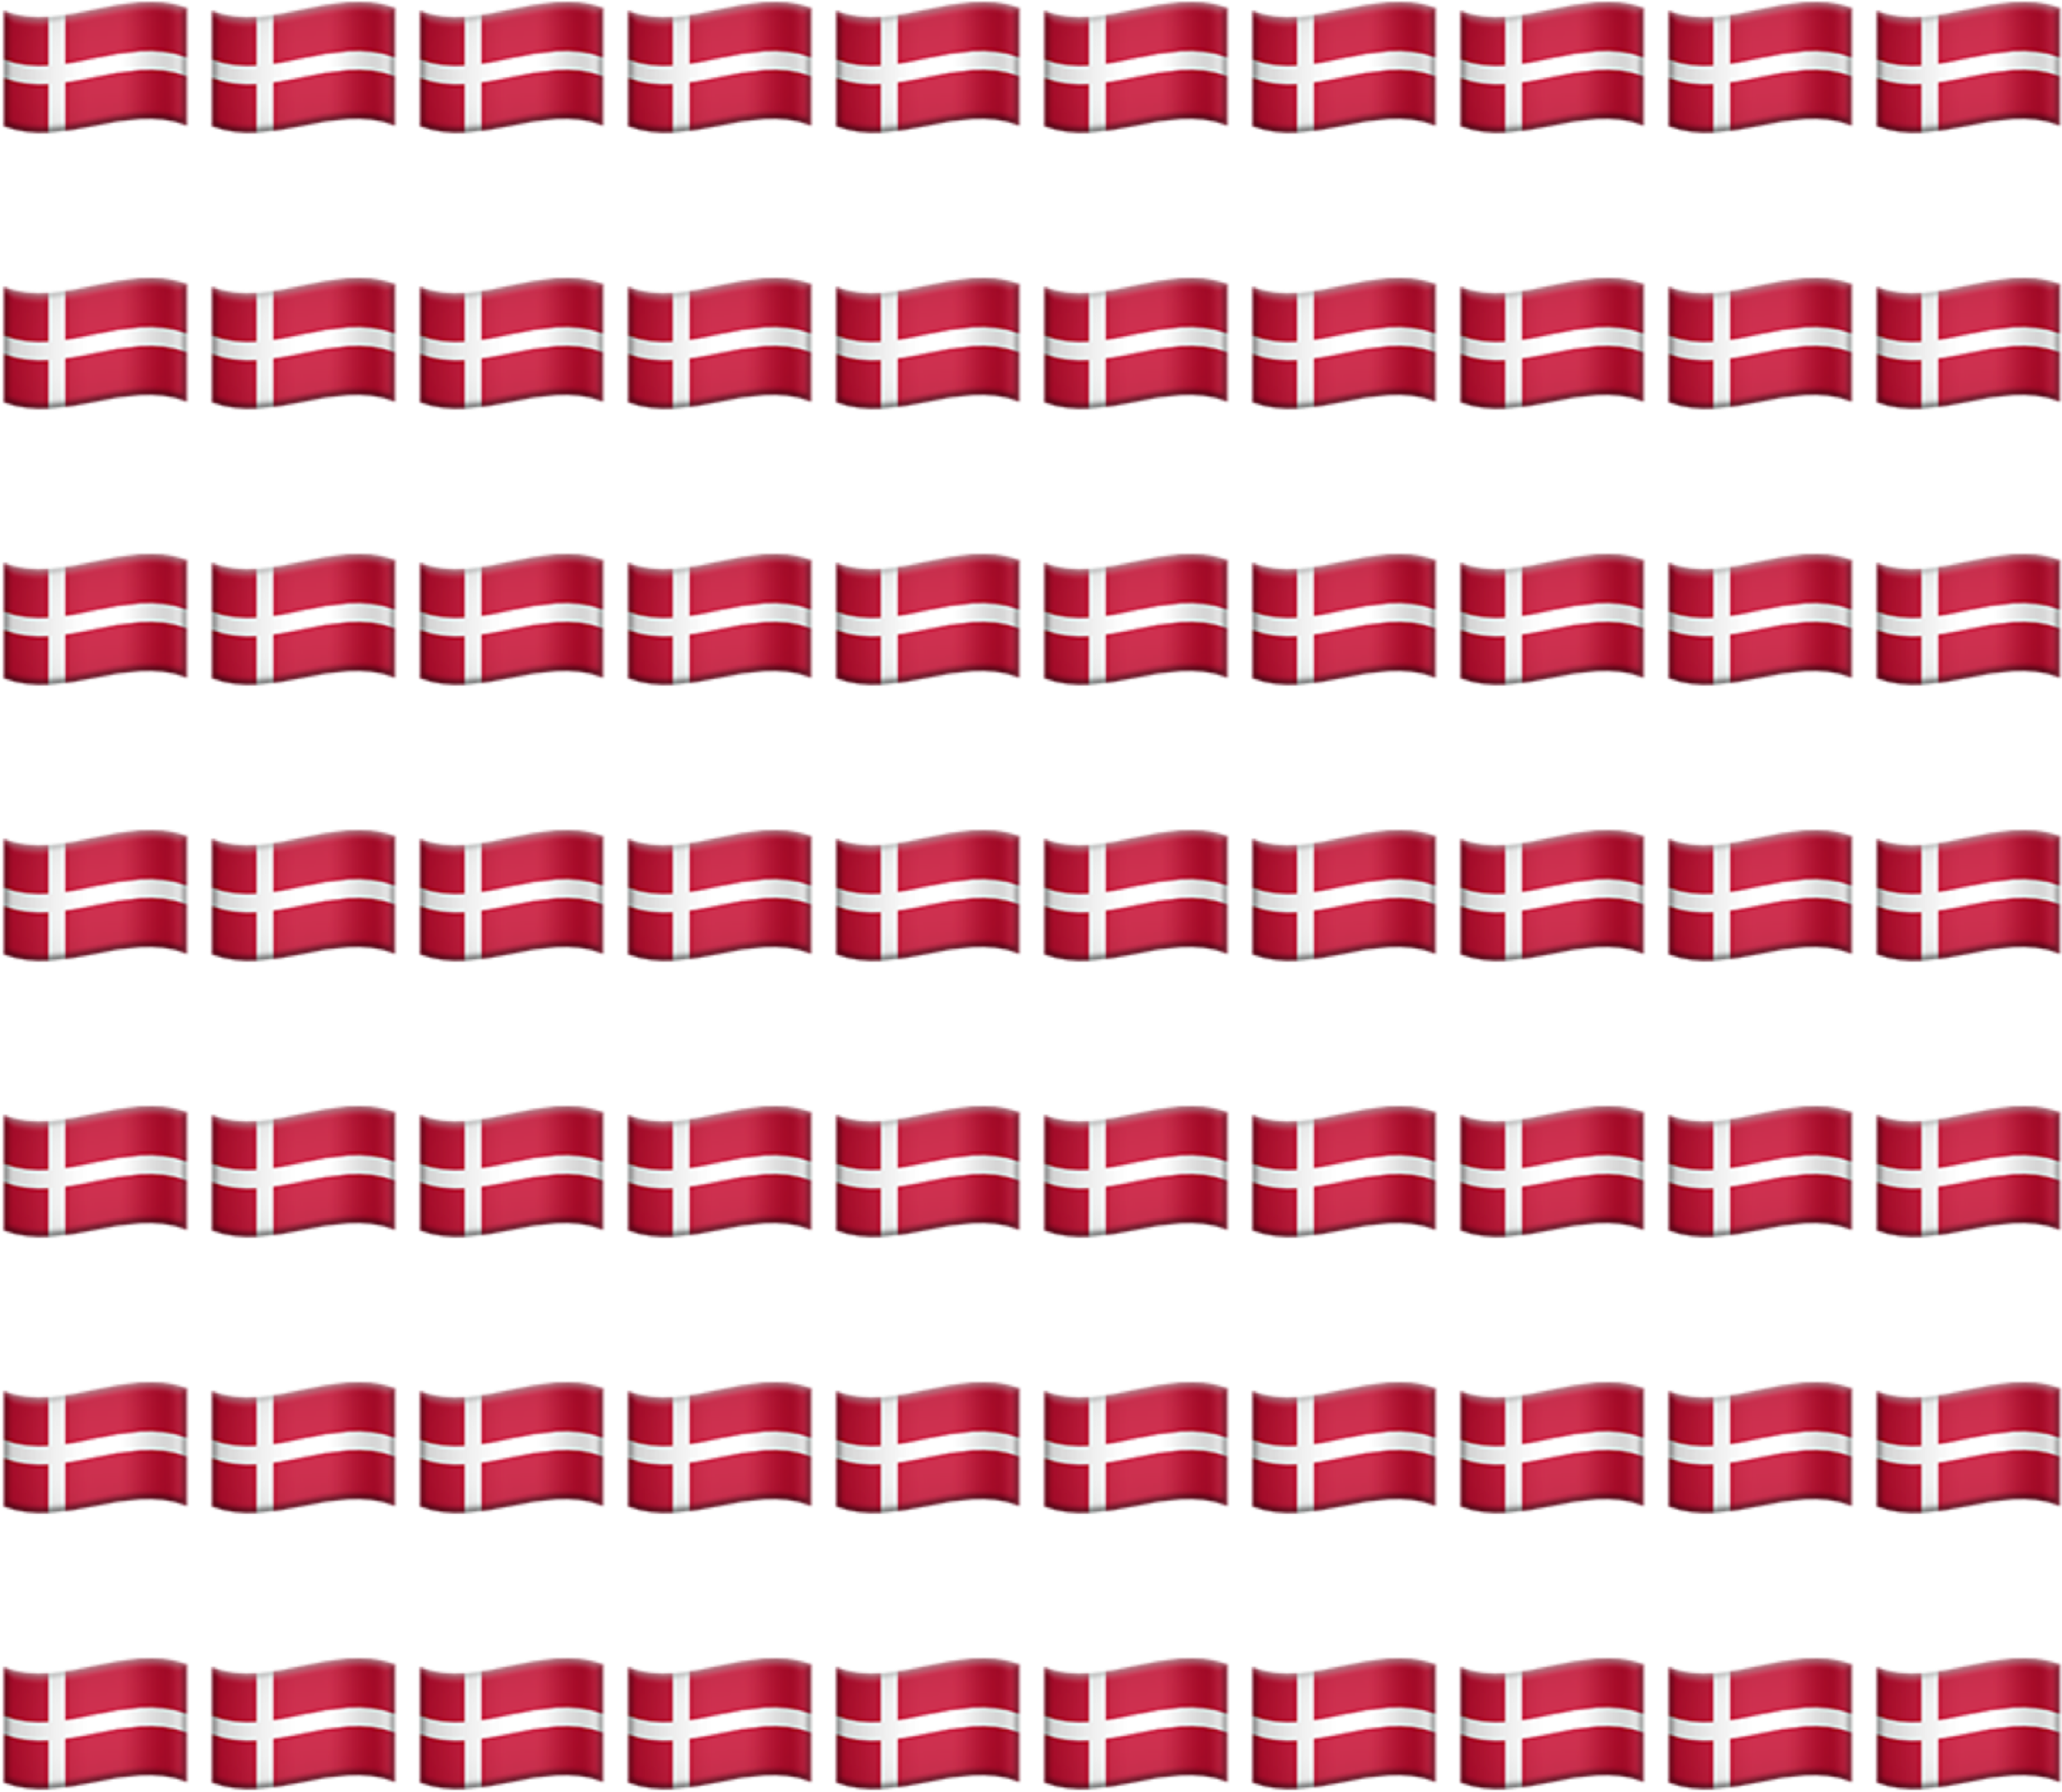 Danish Flags Display Pattern